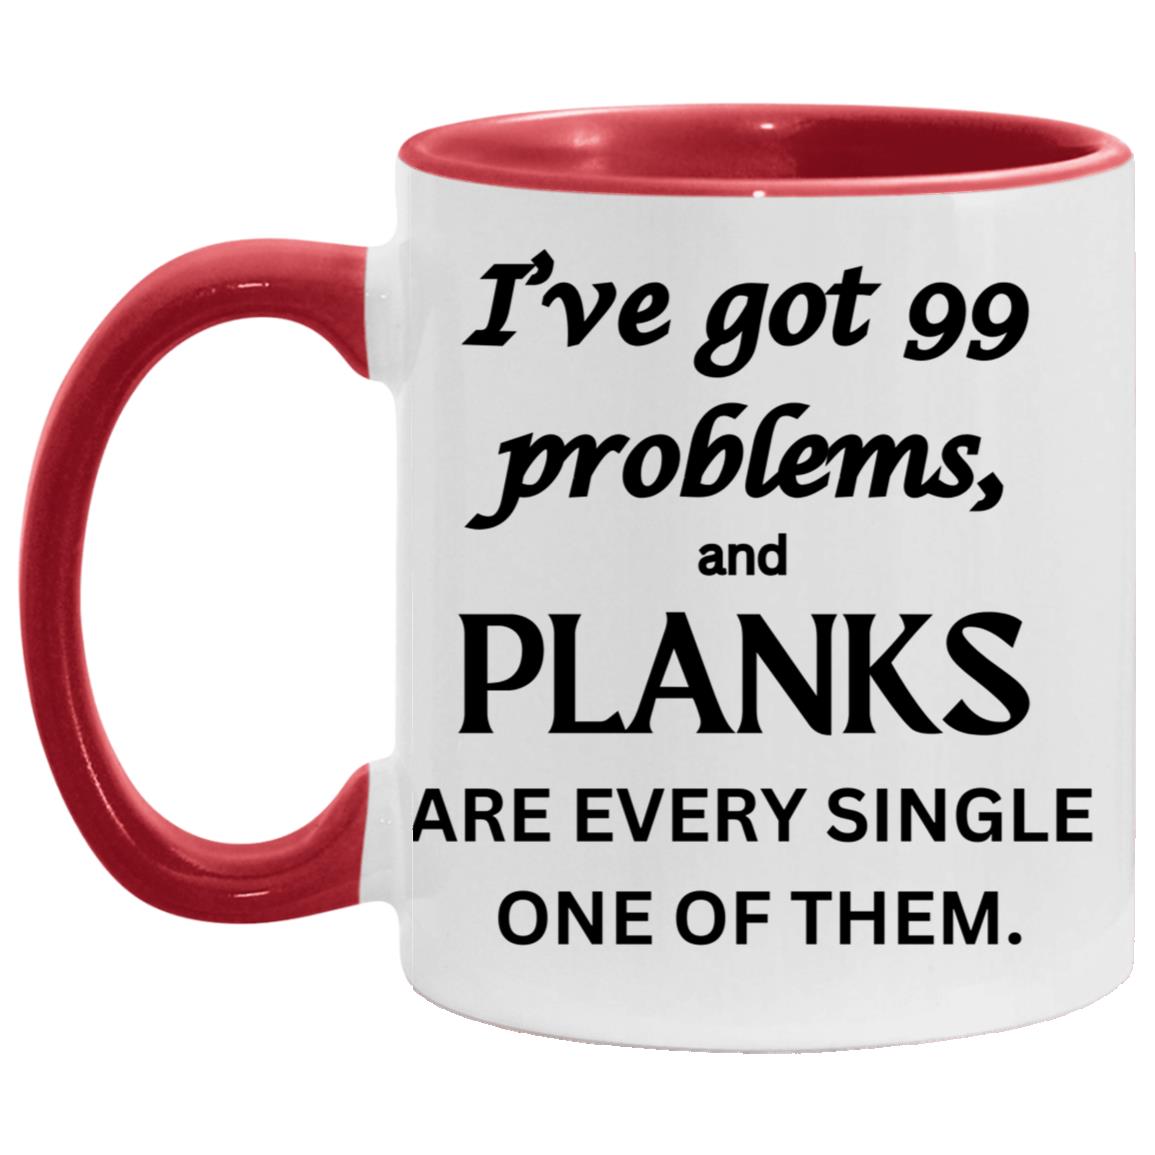 PLANK PROBLEMS Coffee Accent Mug 11 oz